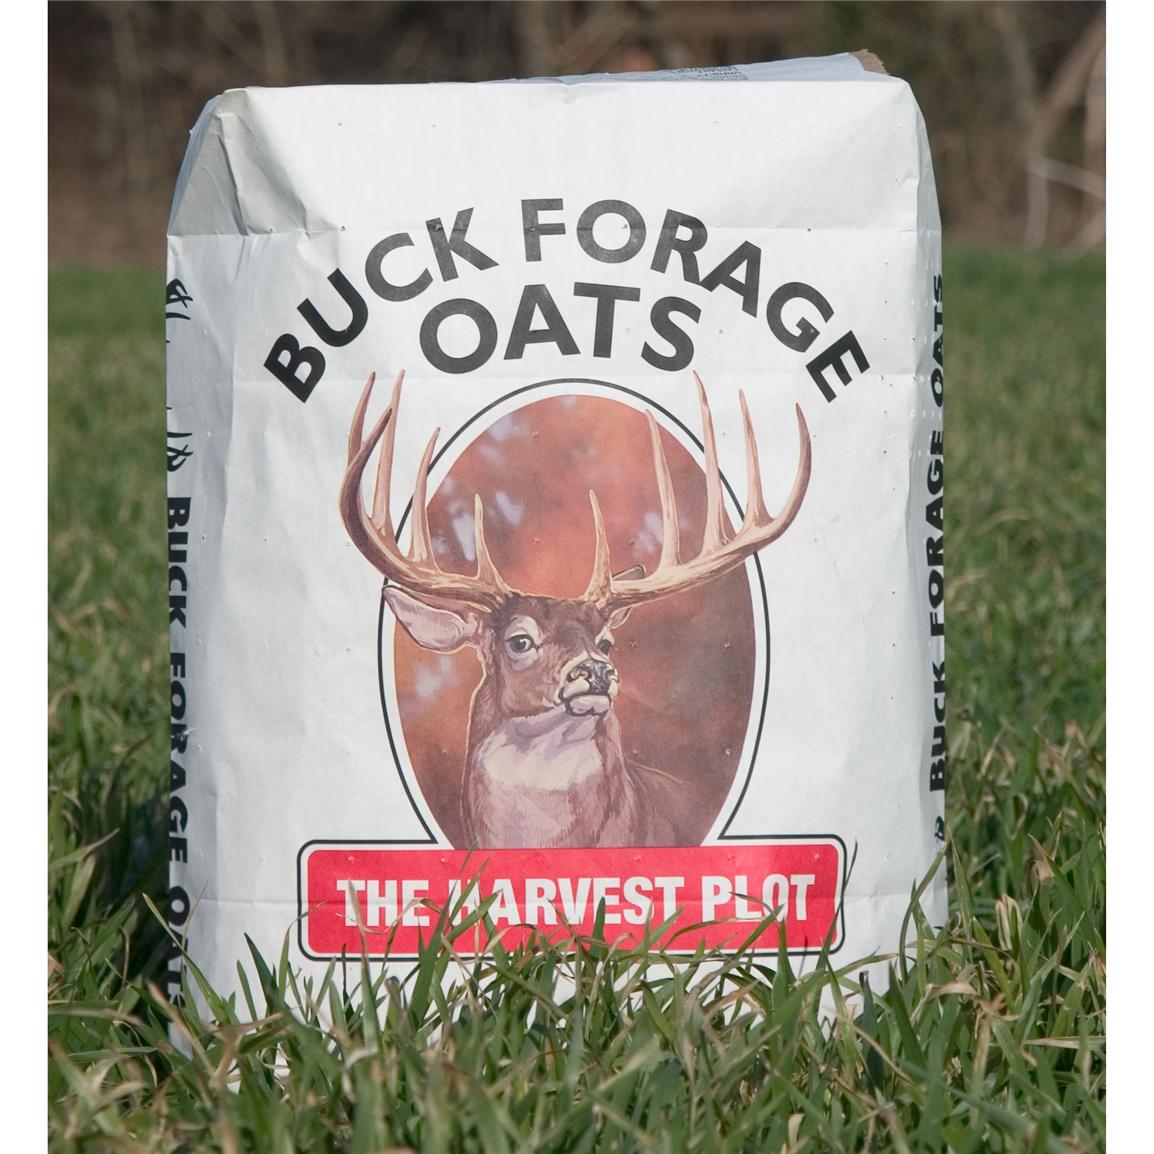 Buck Forage Oats Food Plot Seeds - Seed World